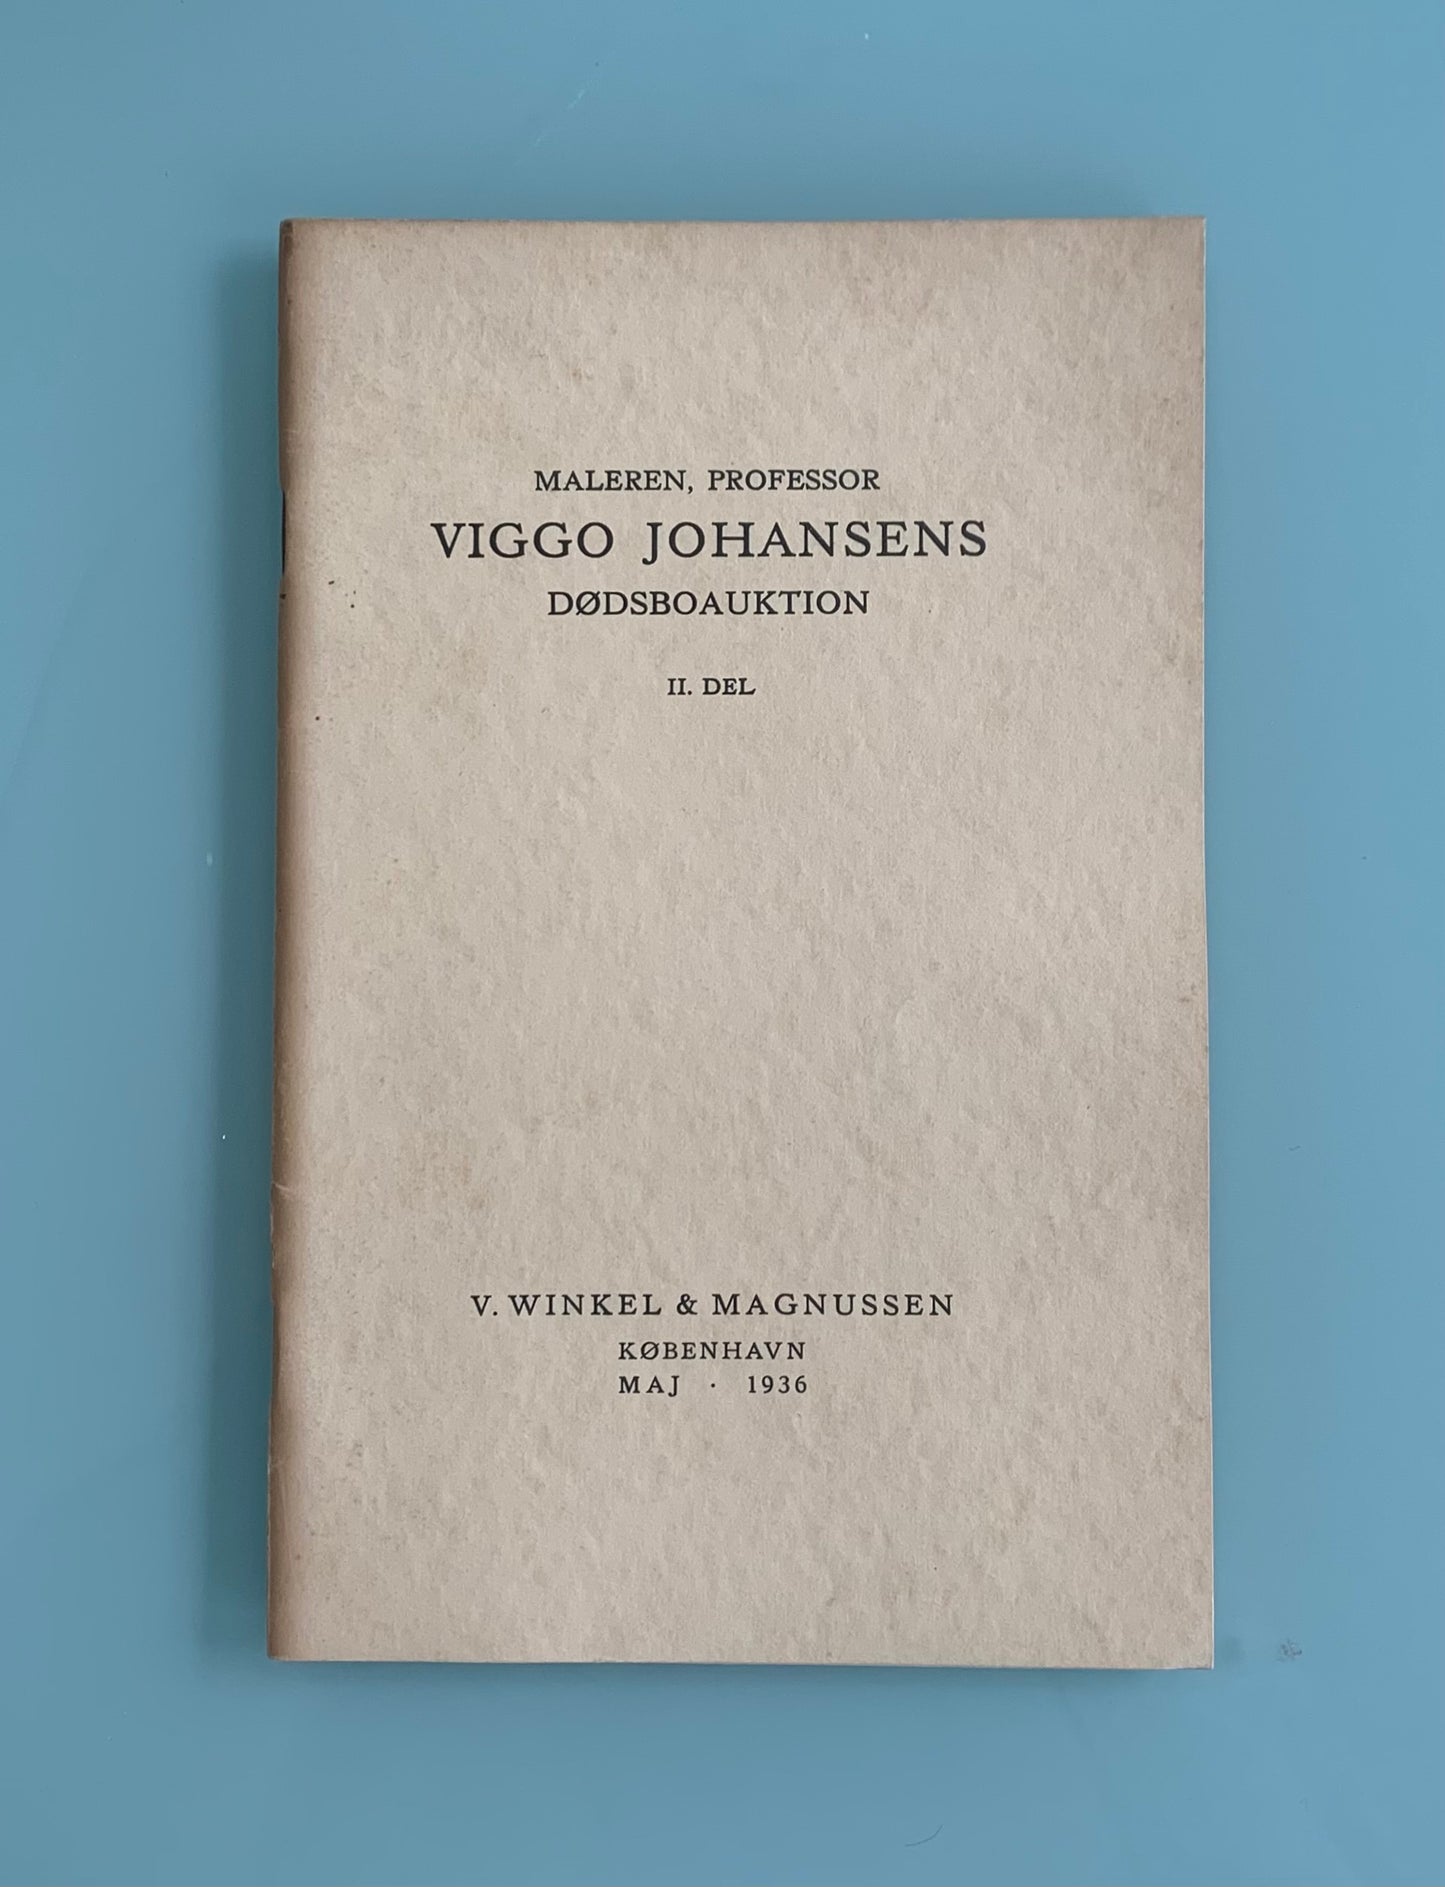 Viggo Johansen. Catalogue from the artists estate auction, 1936